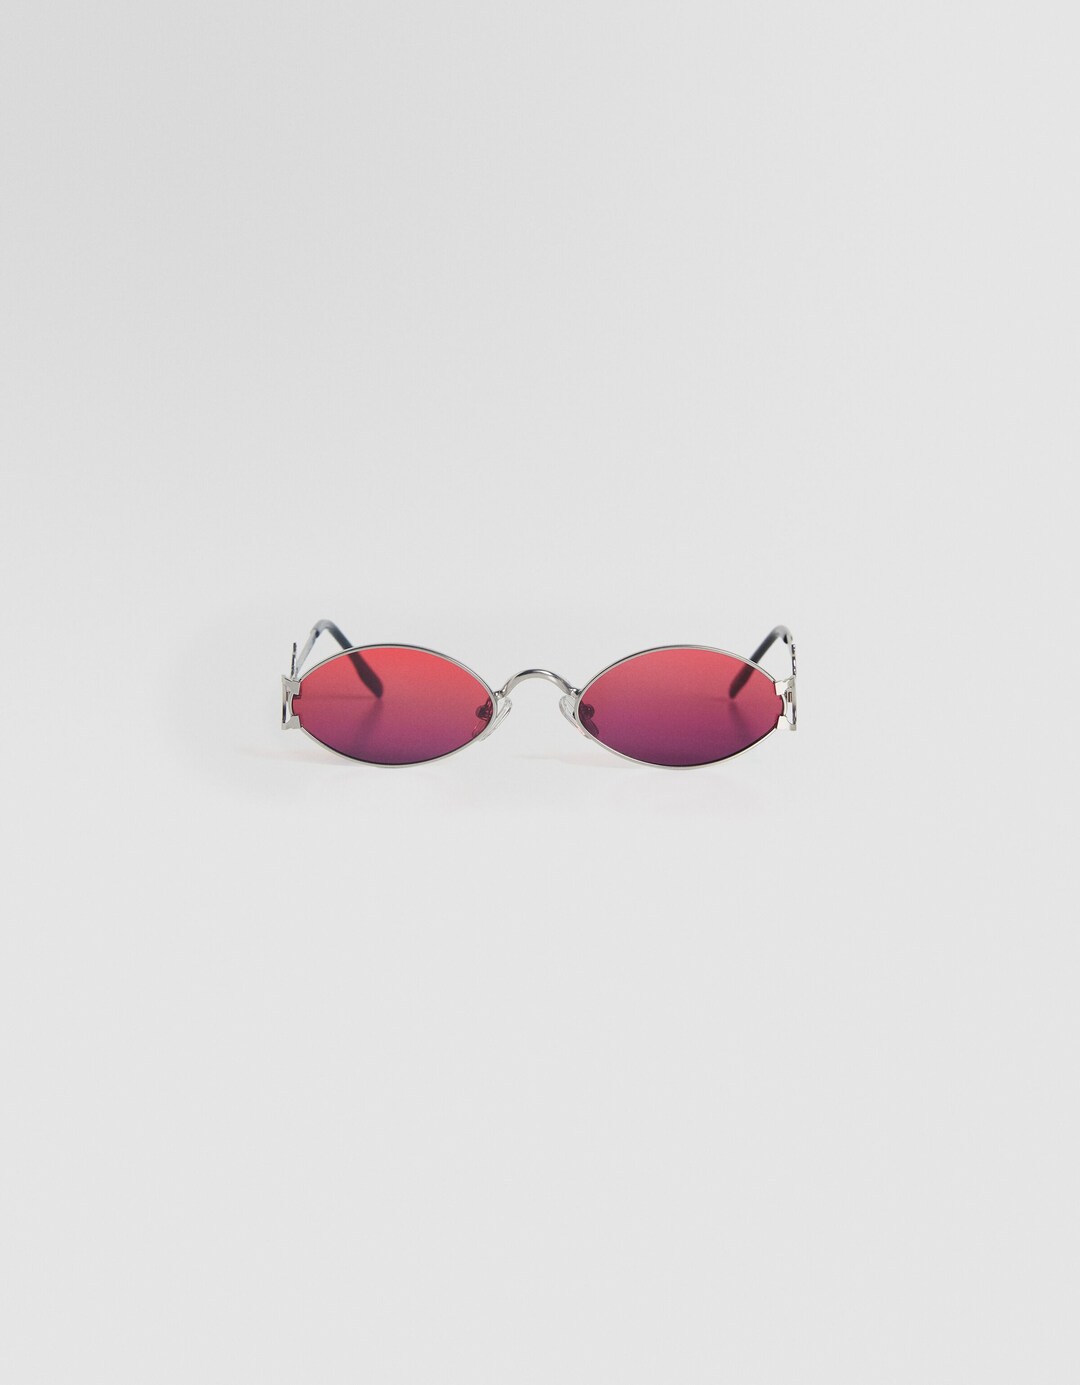 Metallic Generation Bershka sunglasses